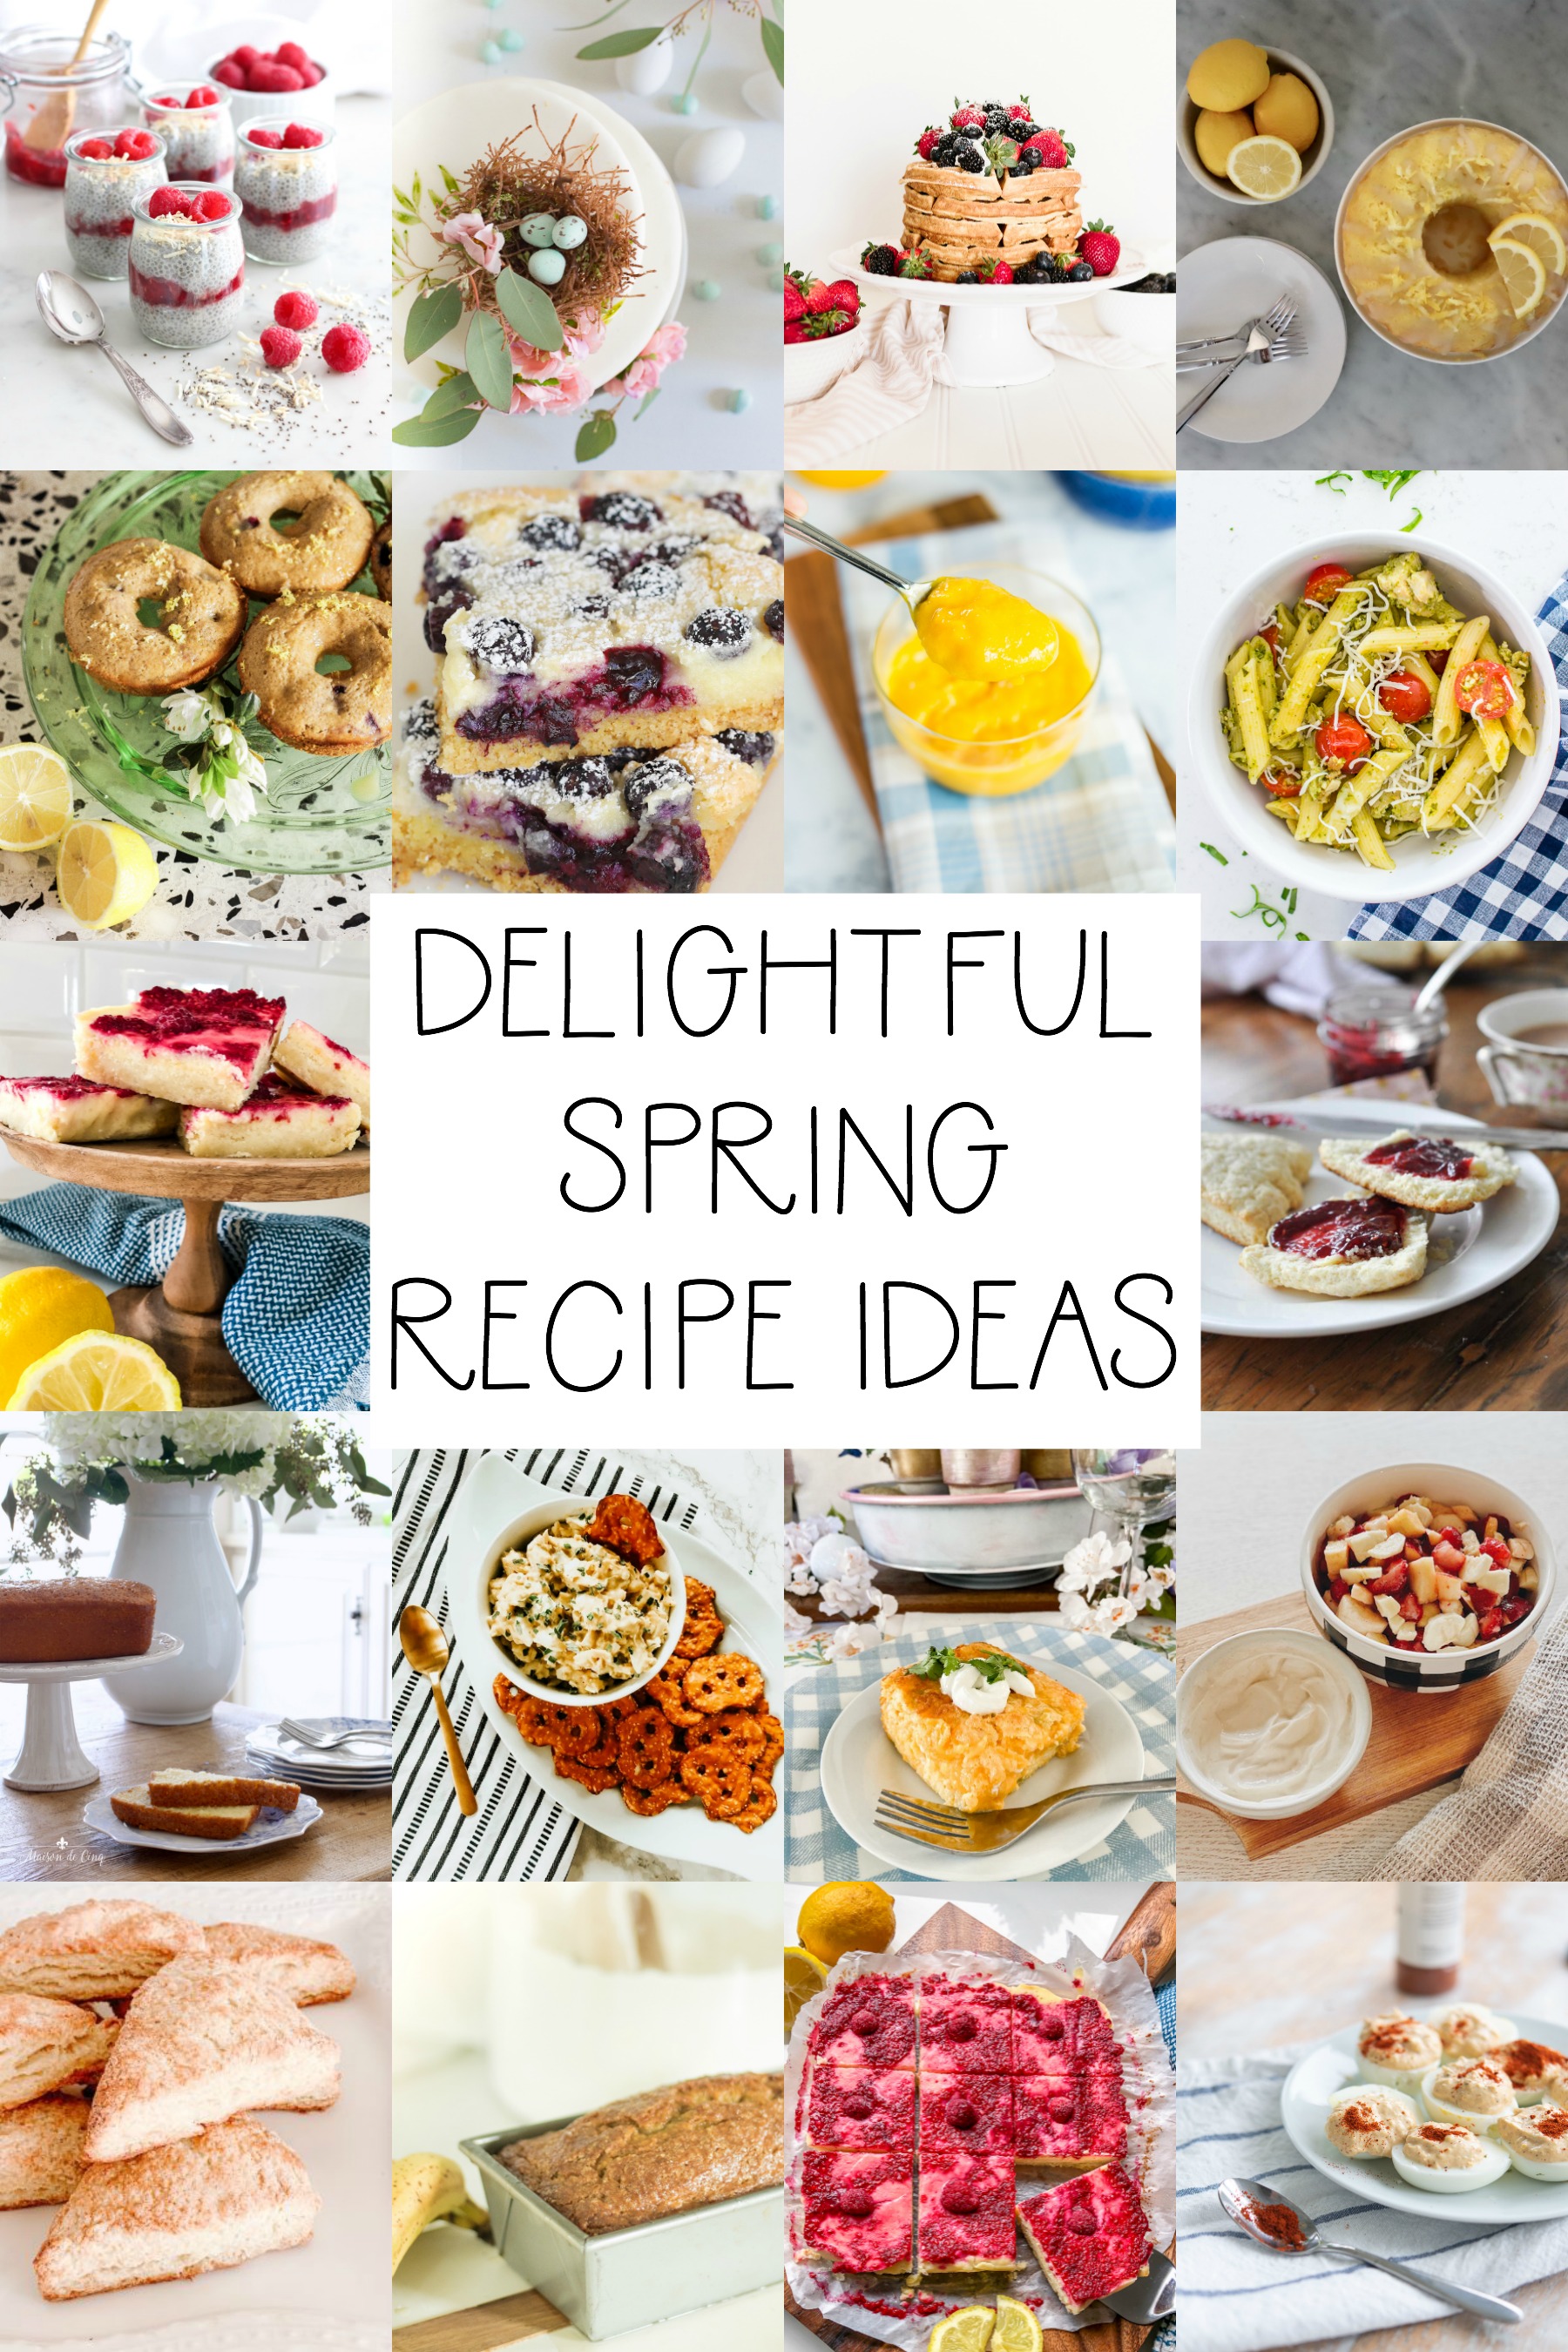 Delightful spring recipe ideas poster.